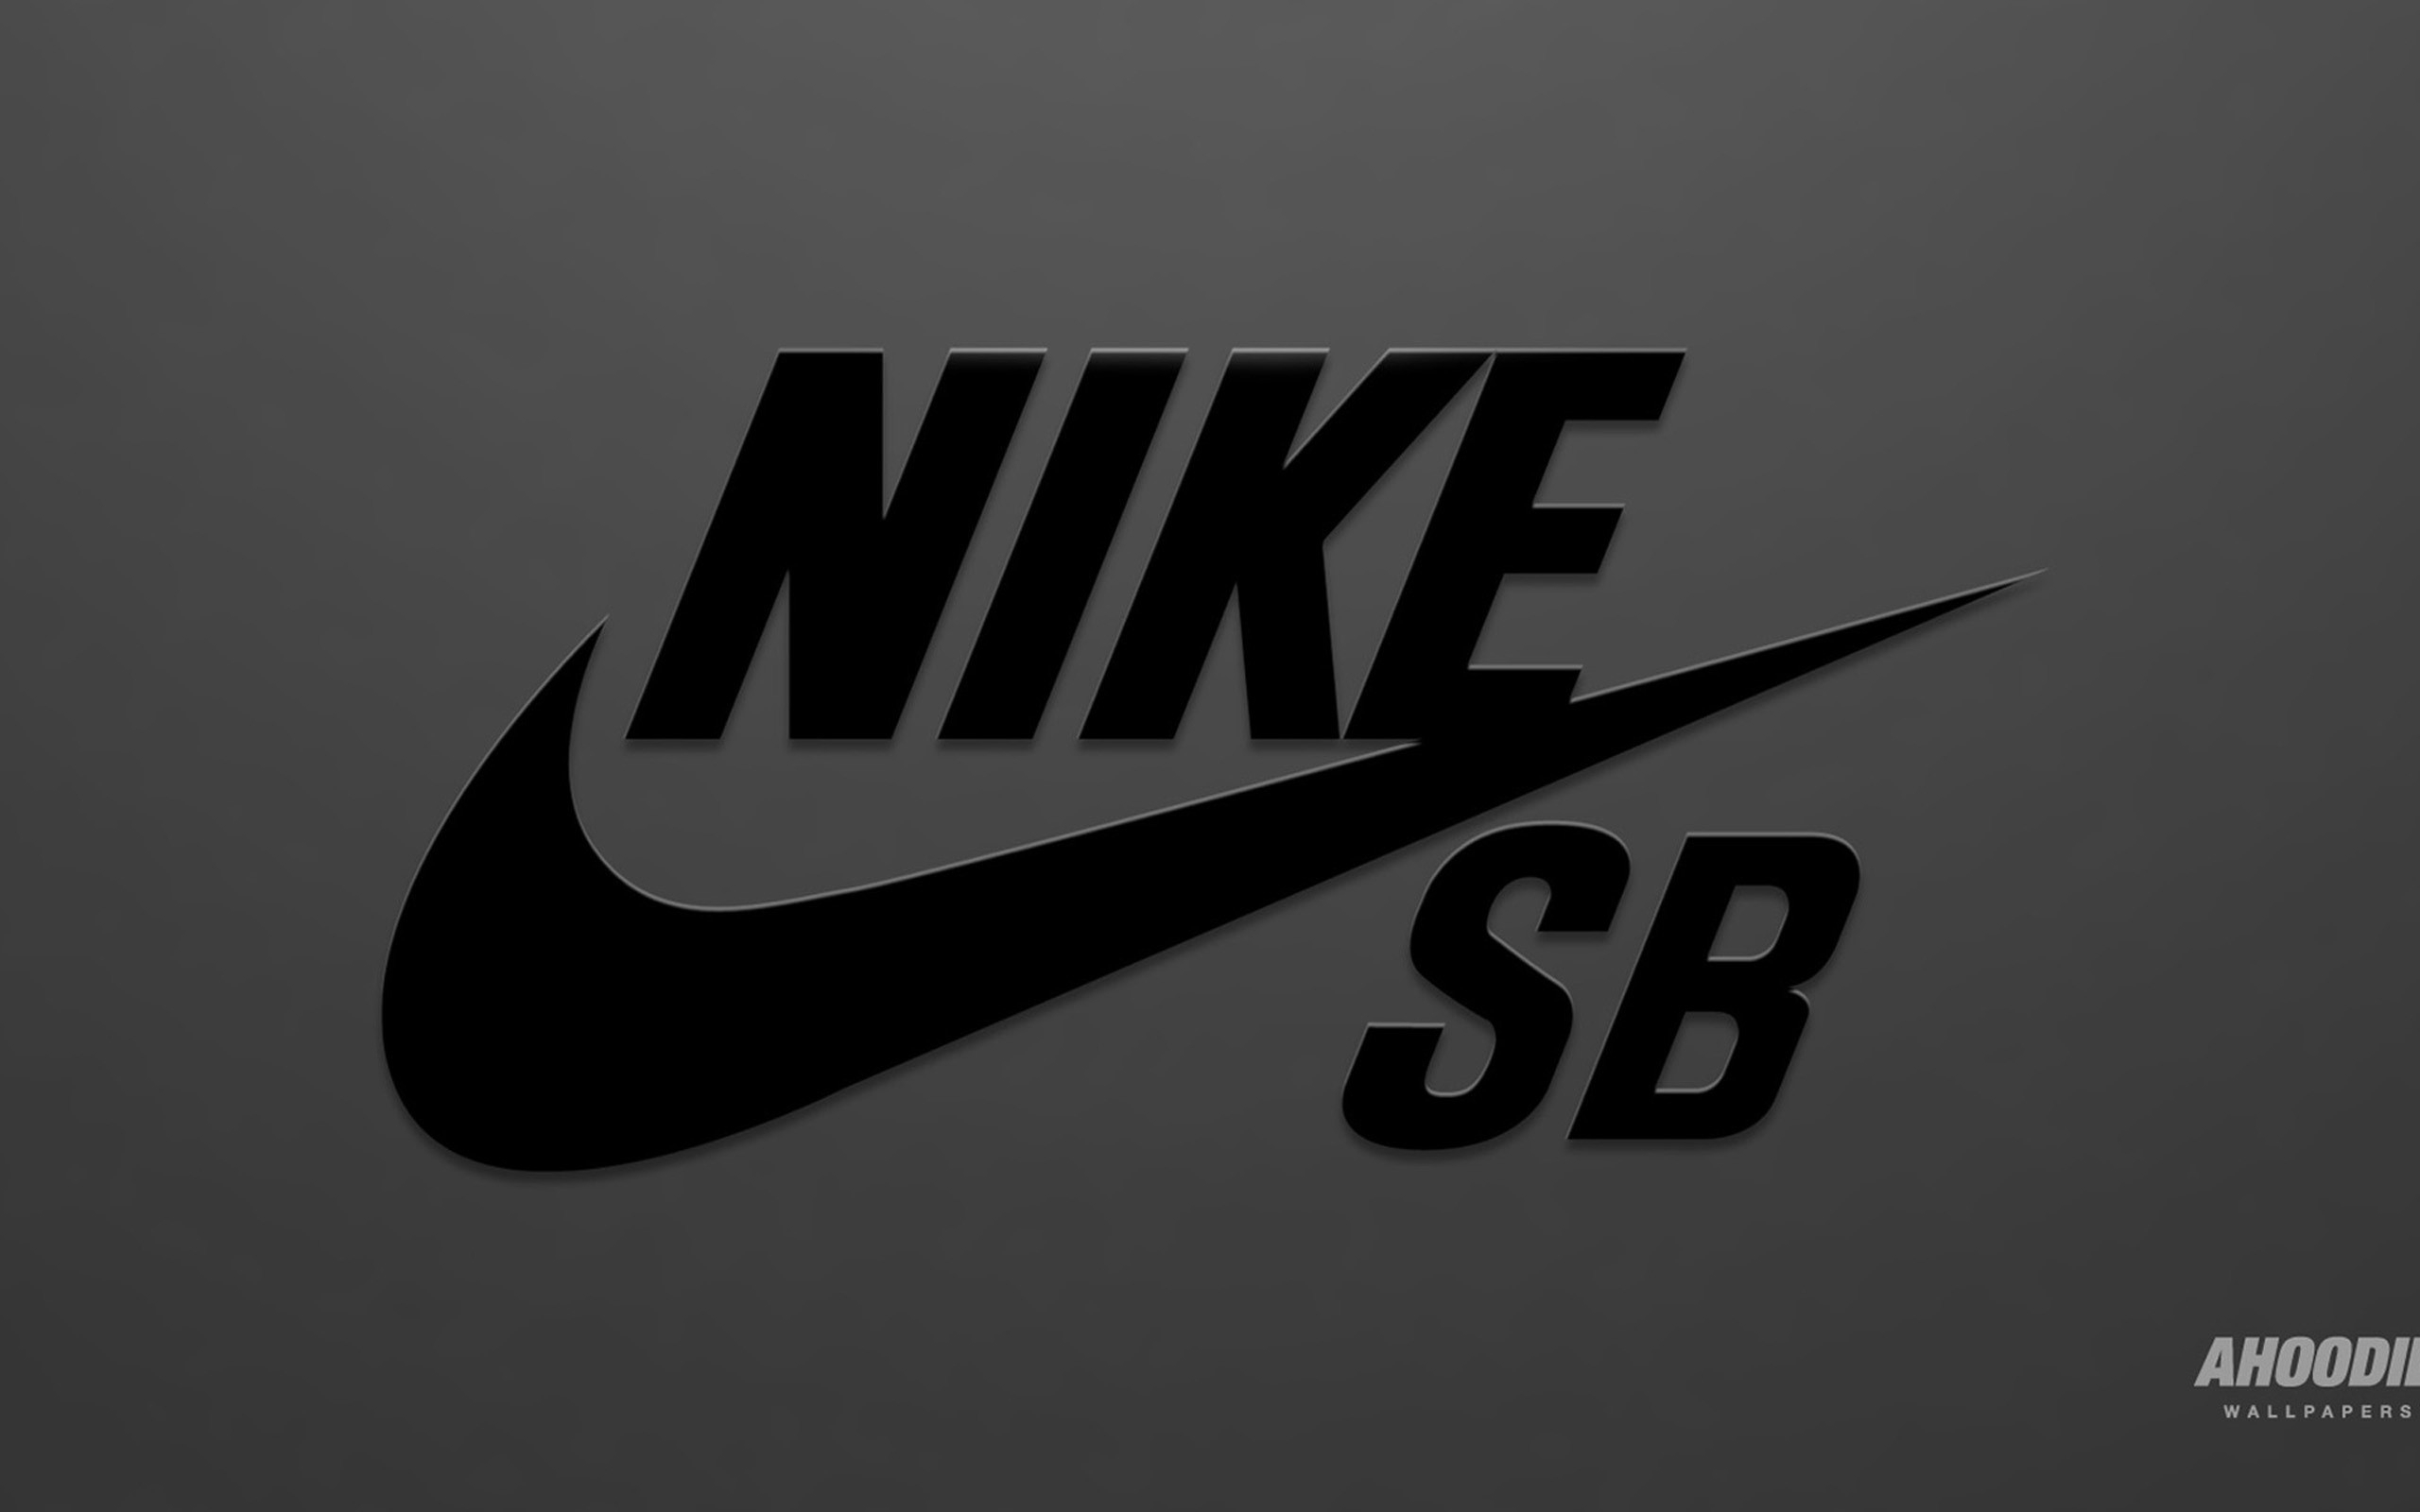 Обои на айфон найк. Nike SB logo. Найк лого 2020. Nike SB Wallpapers.